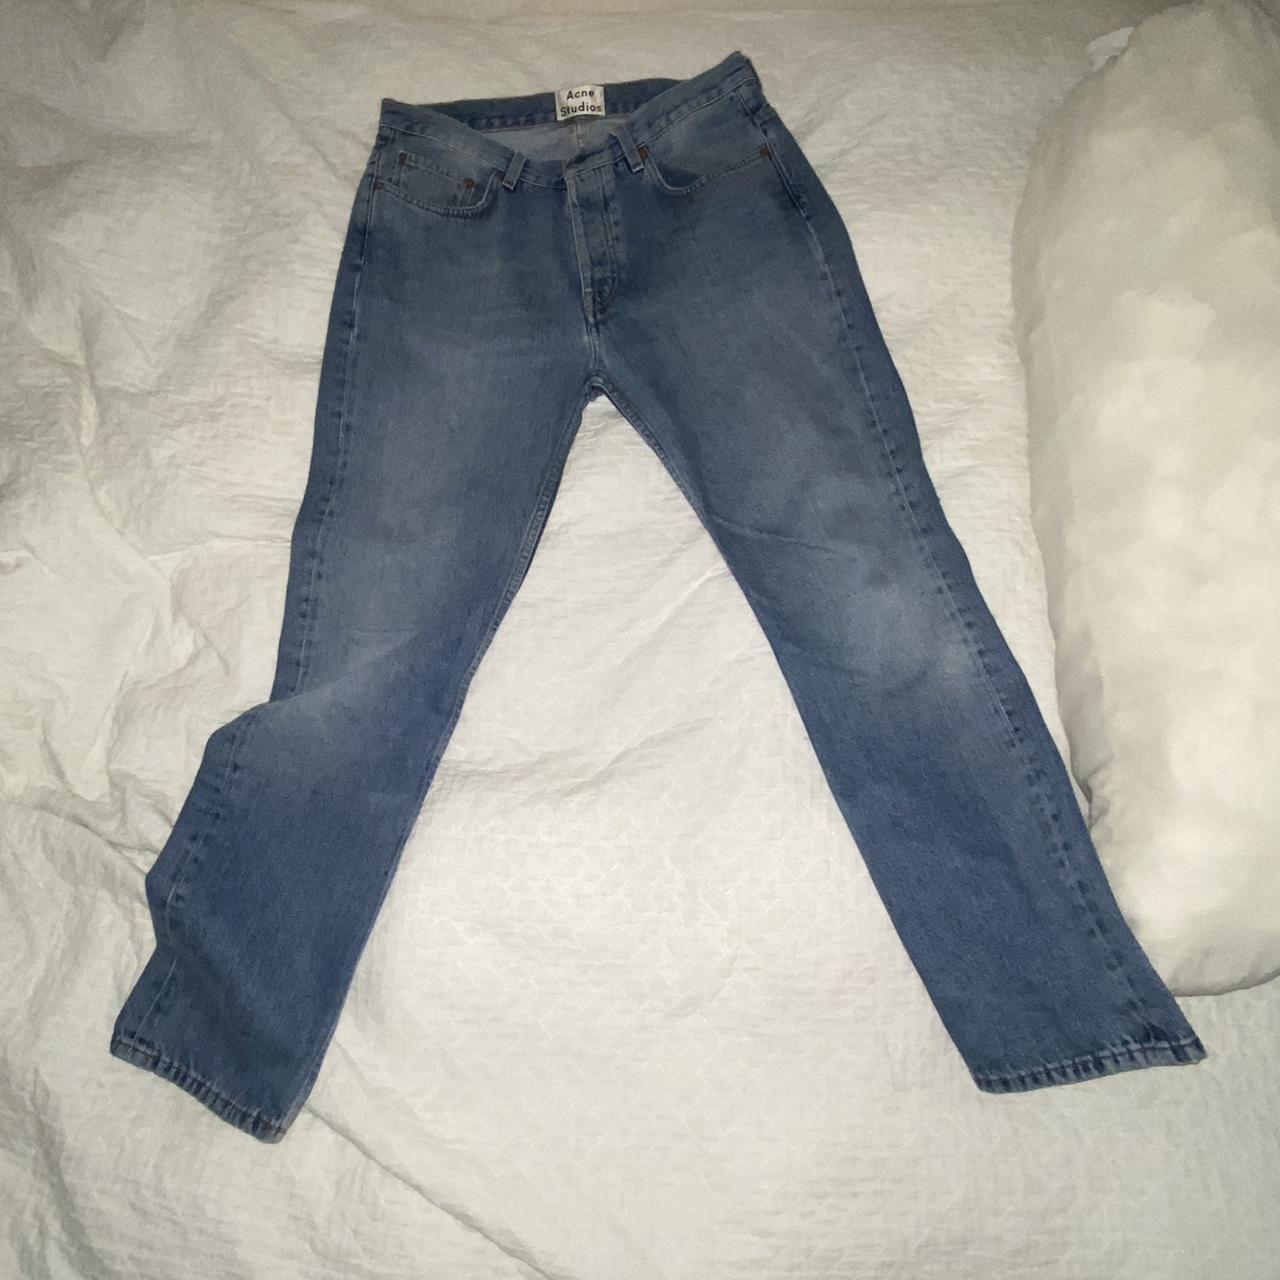 Acne studios jeans waist 32 - Depop